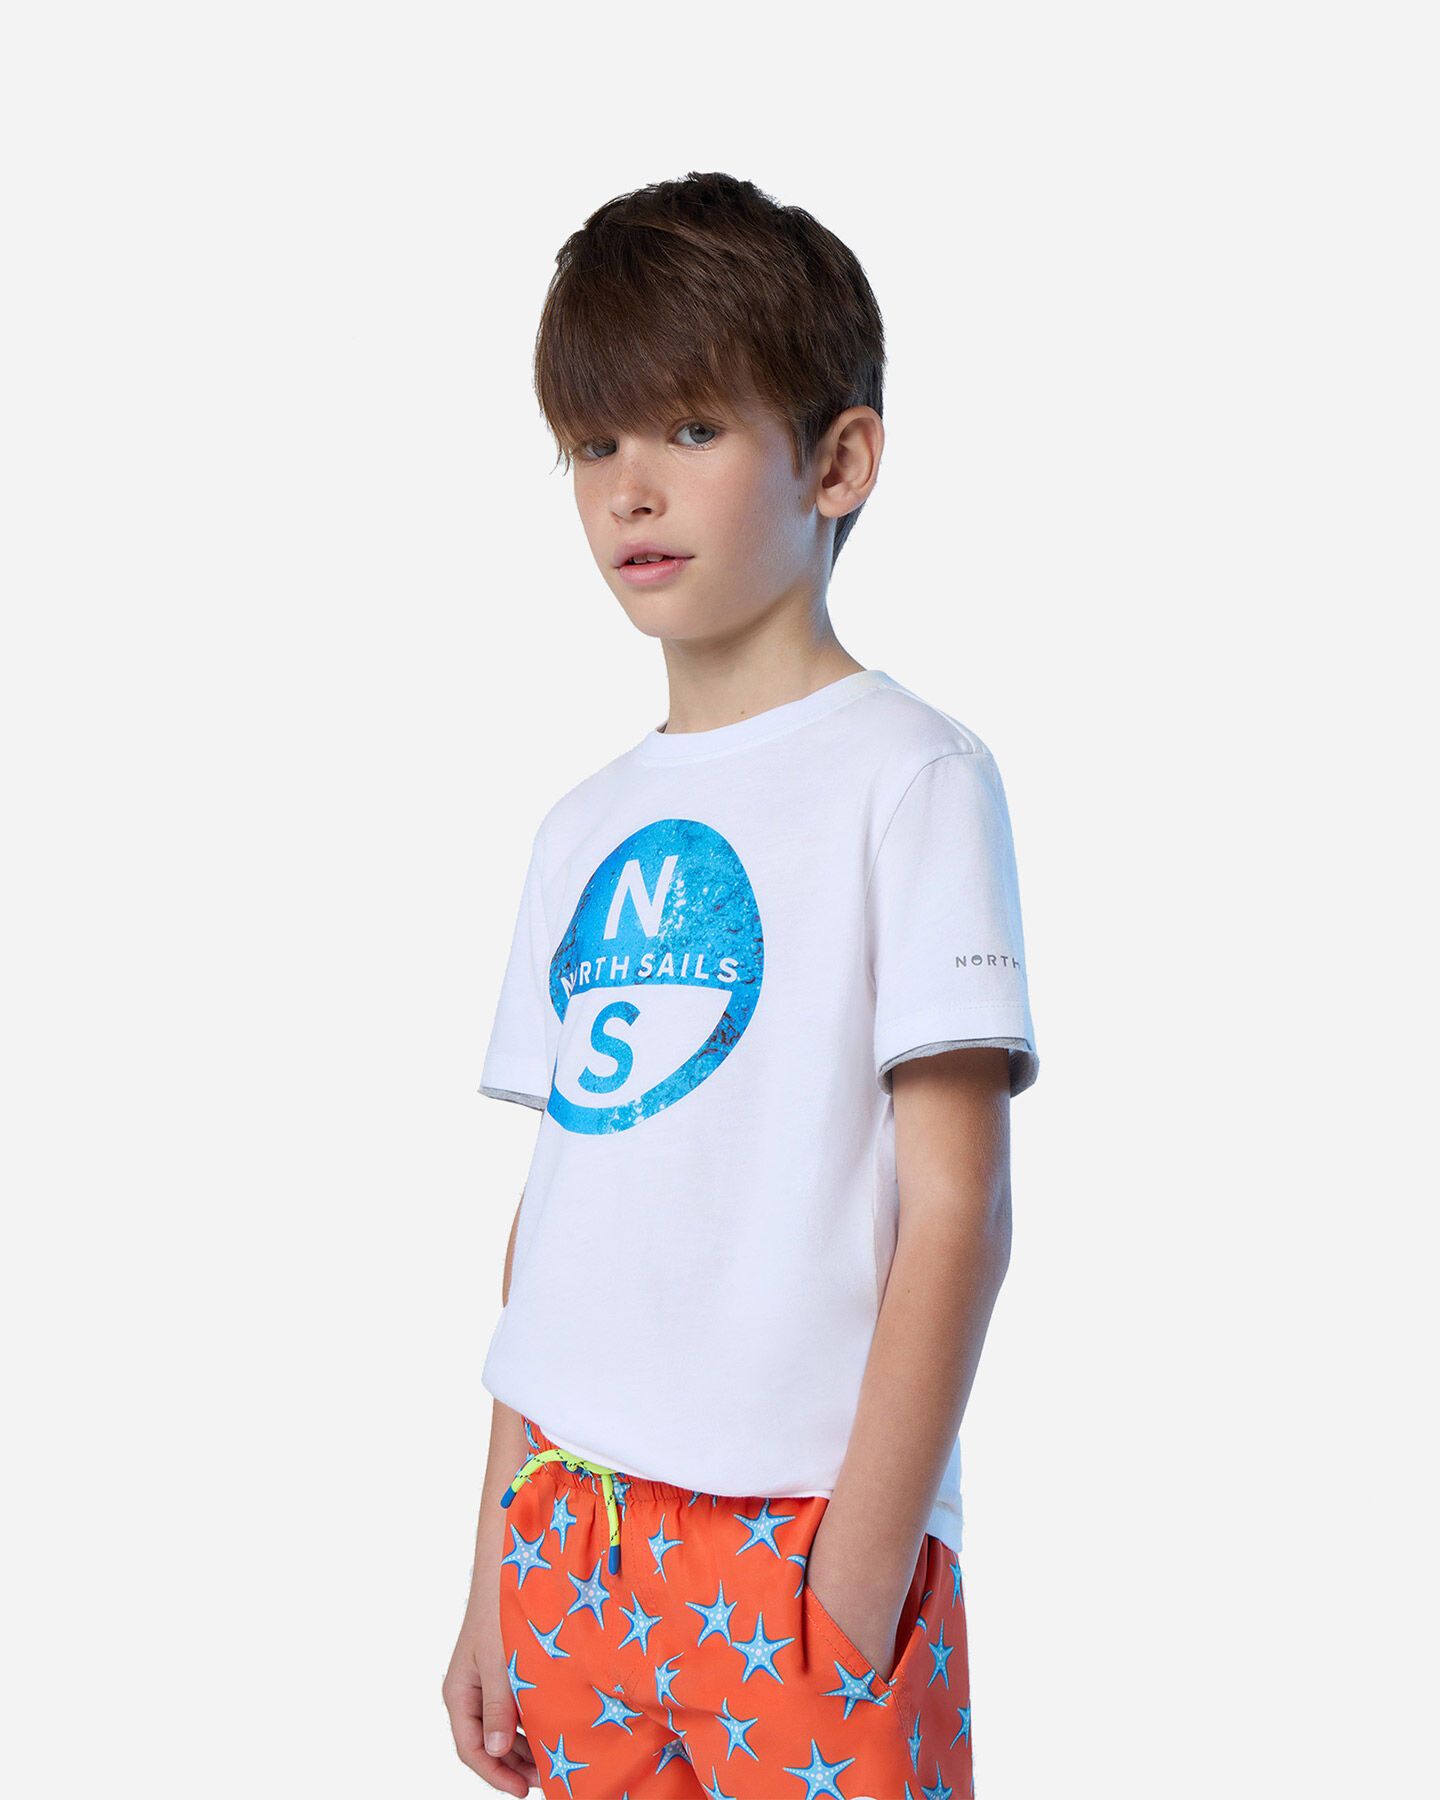  T-Shirt NORTH SAILS NEW LOGO SUMMER JR S5684032|0101|8 scatto 2